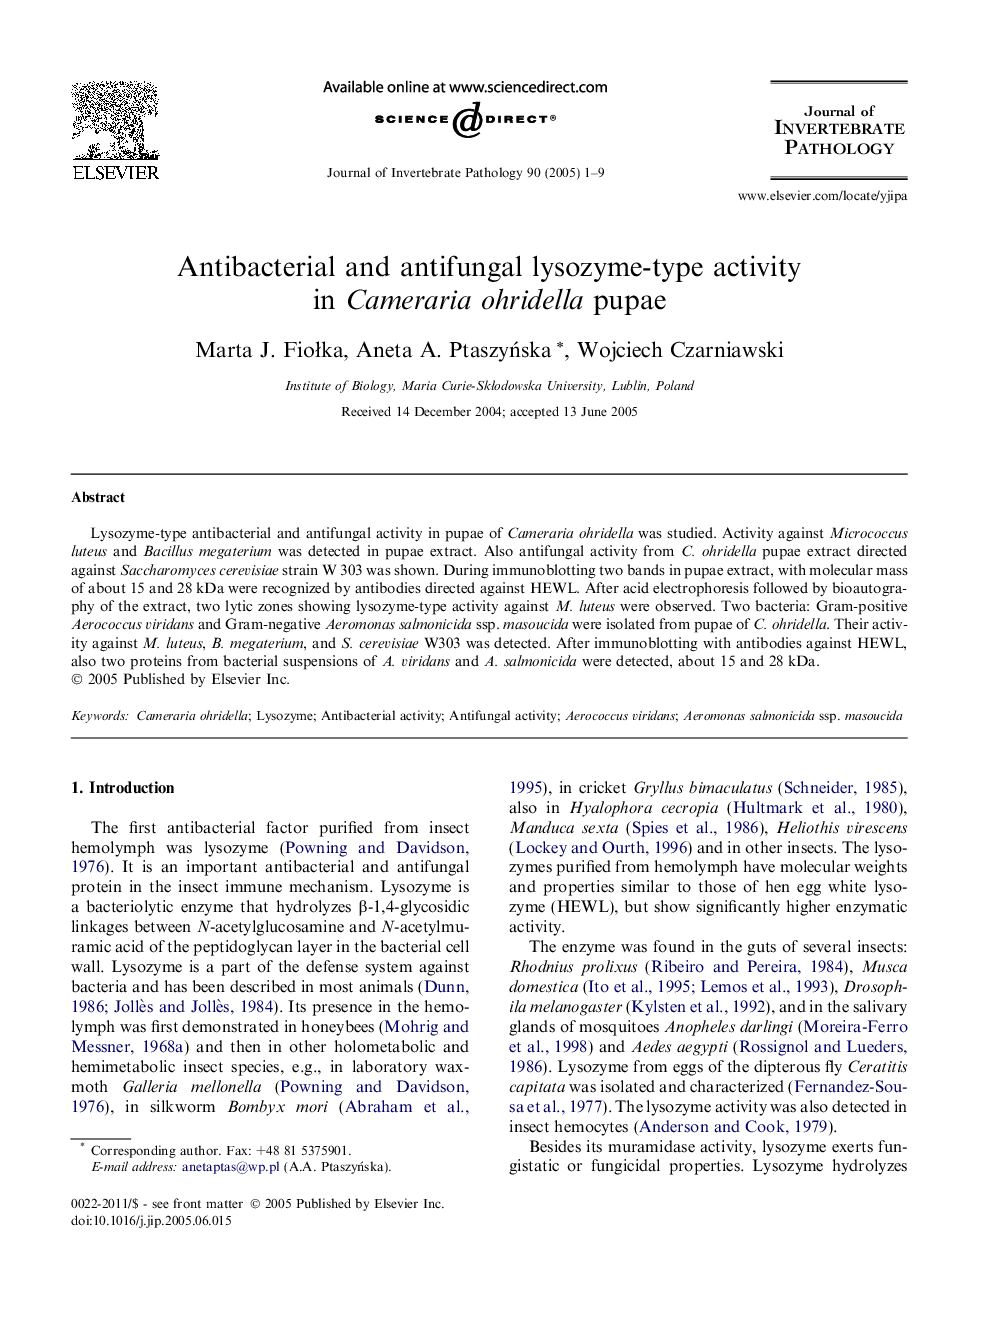 Antibacterial and antifungal lysozyme-type activity in Cameraria ohridella pupae